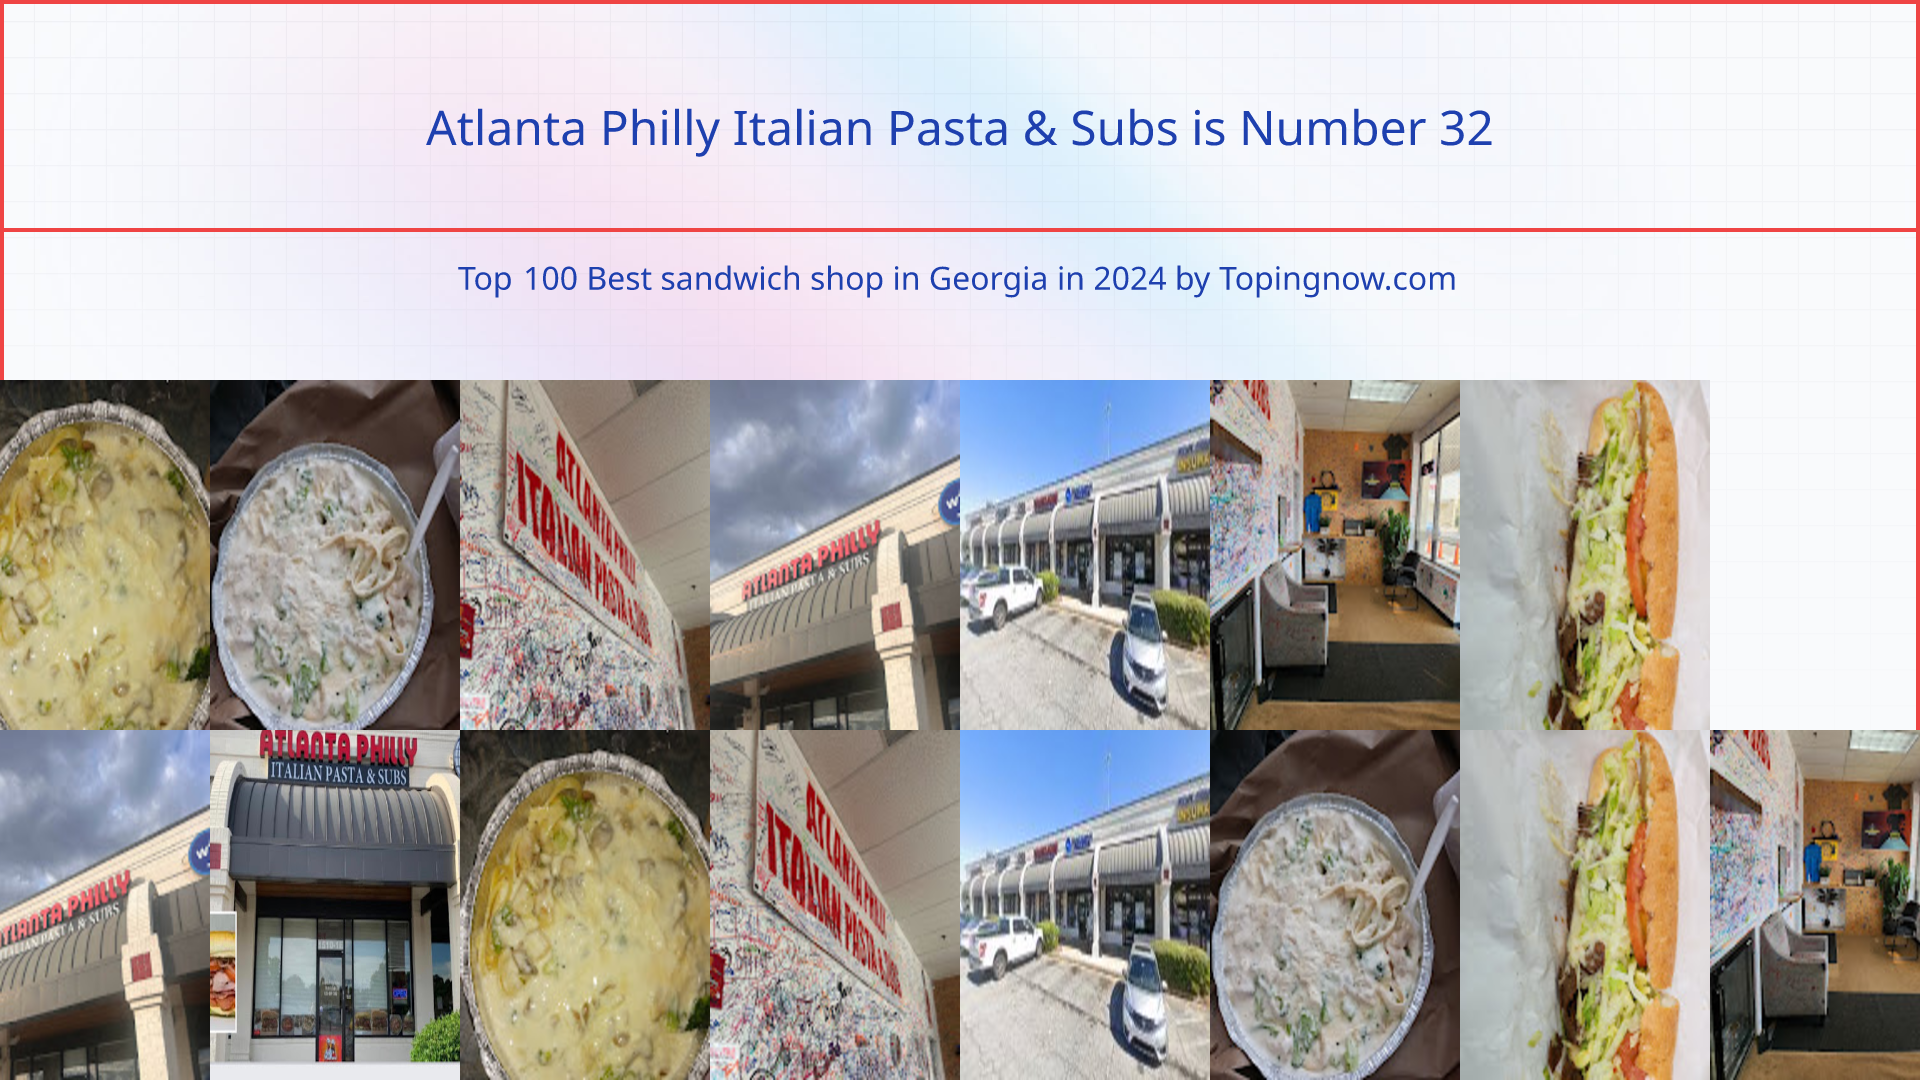 Atlanta Philly Italian Pasta & Subs: Top 100 Best sandwich shop in Georgia in 2024